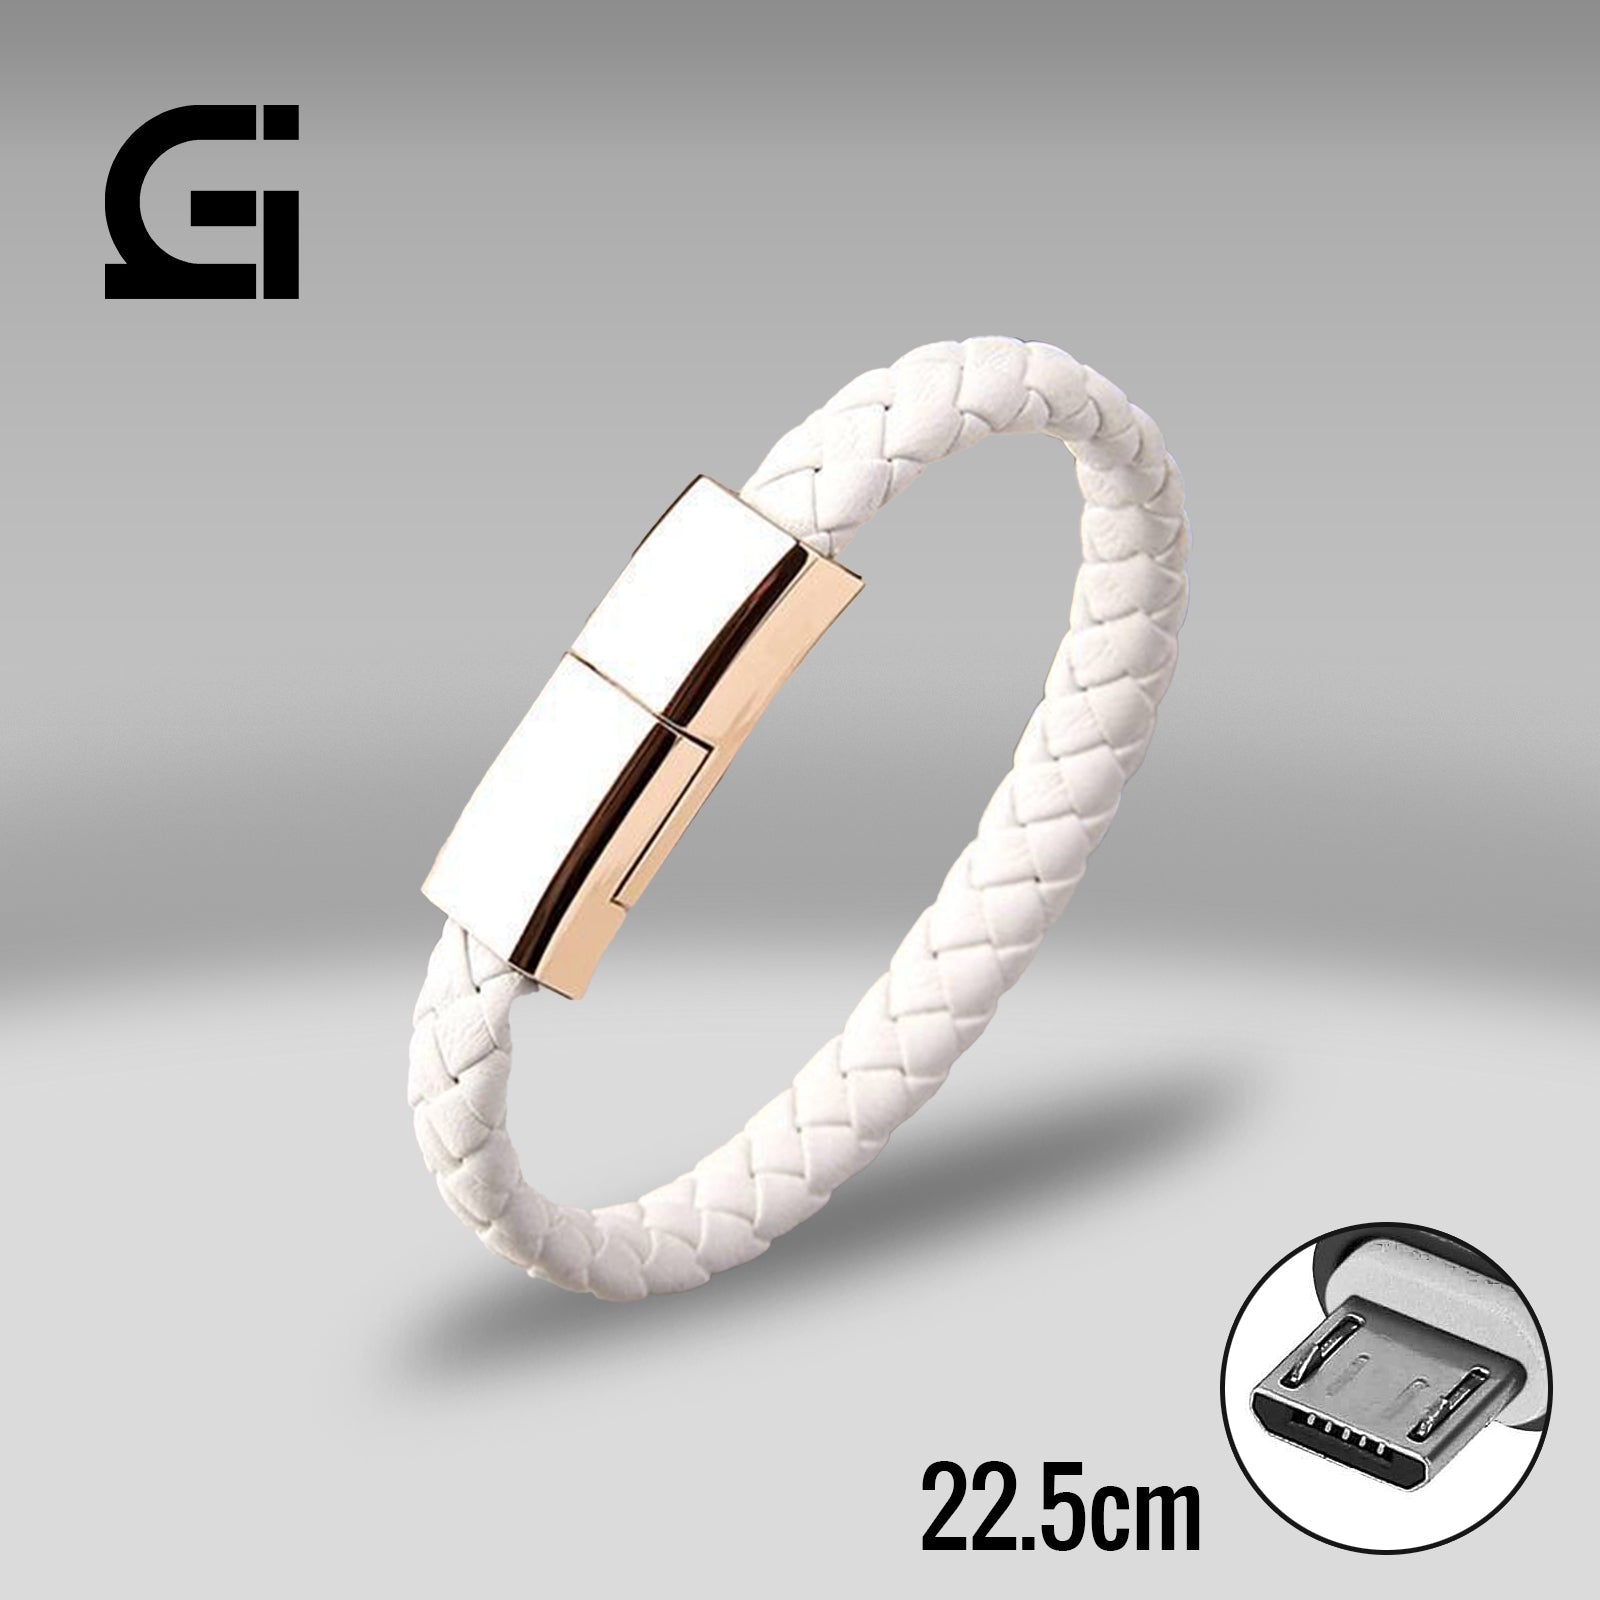 Bracelet USB "Snake" - Gadget-In-Utile